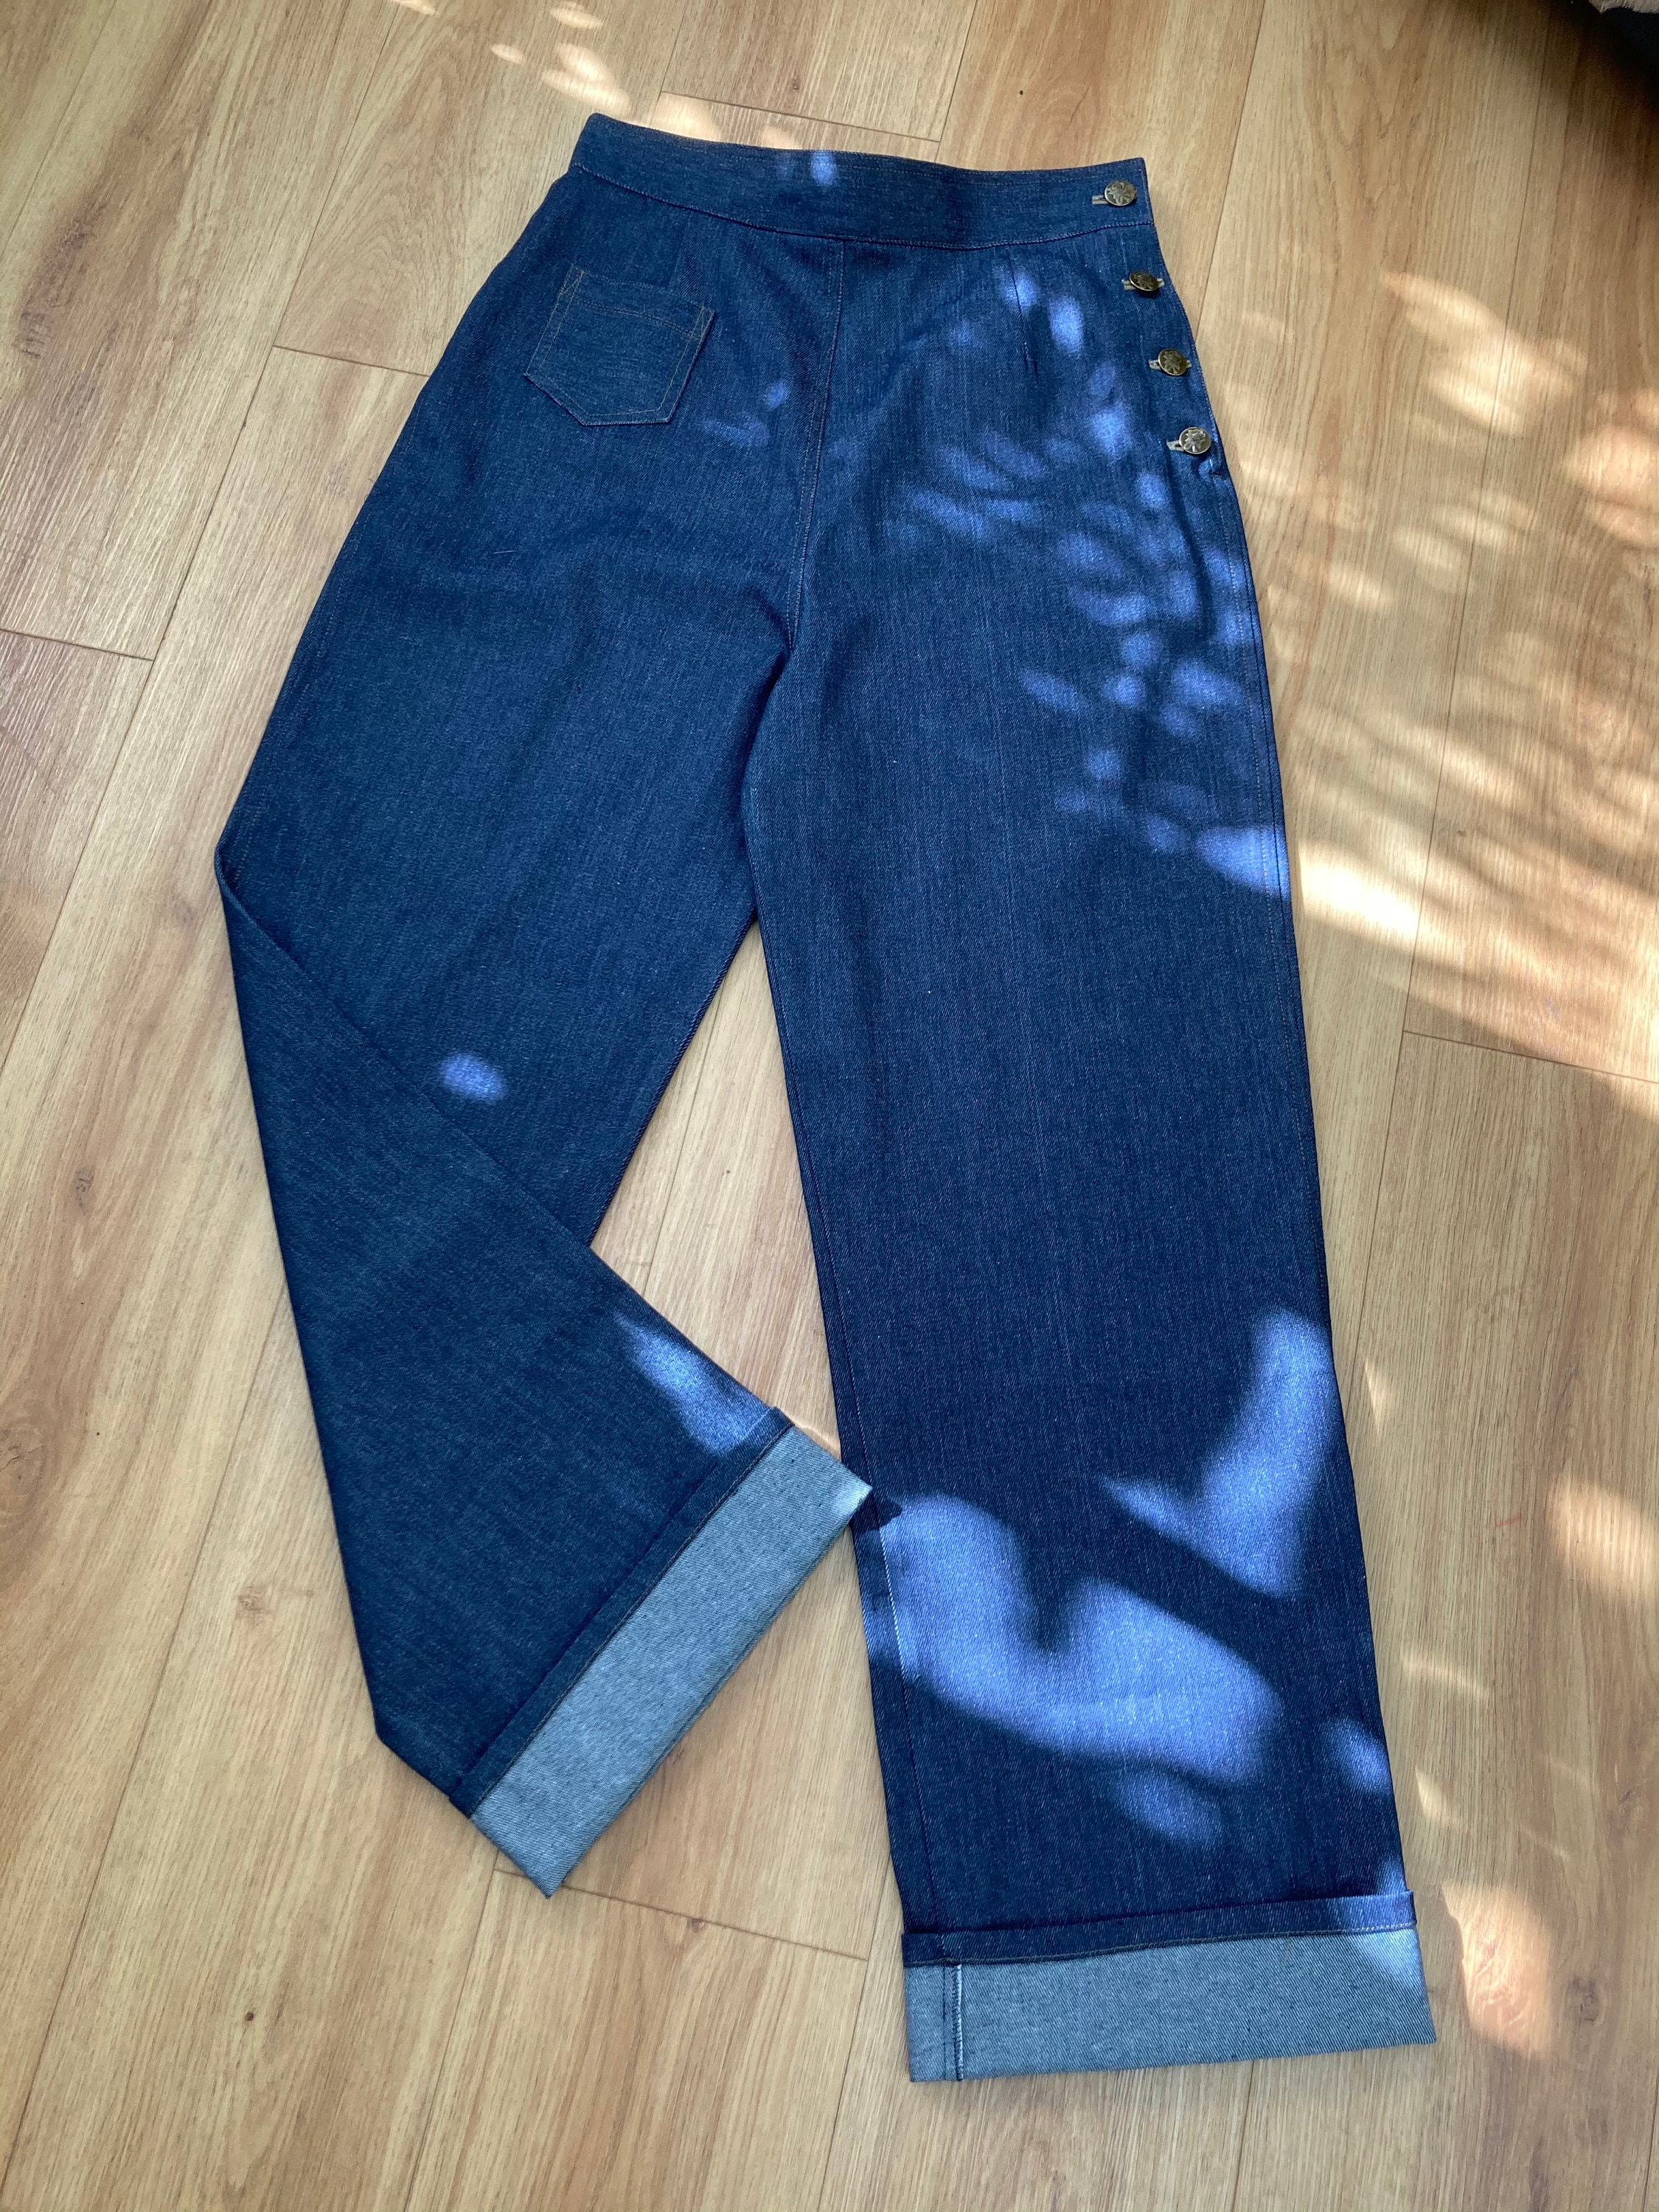 Jeans Vintage 1940s Style Denim Trousers/jeans Rockabilly - Etsy UK